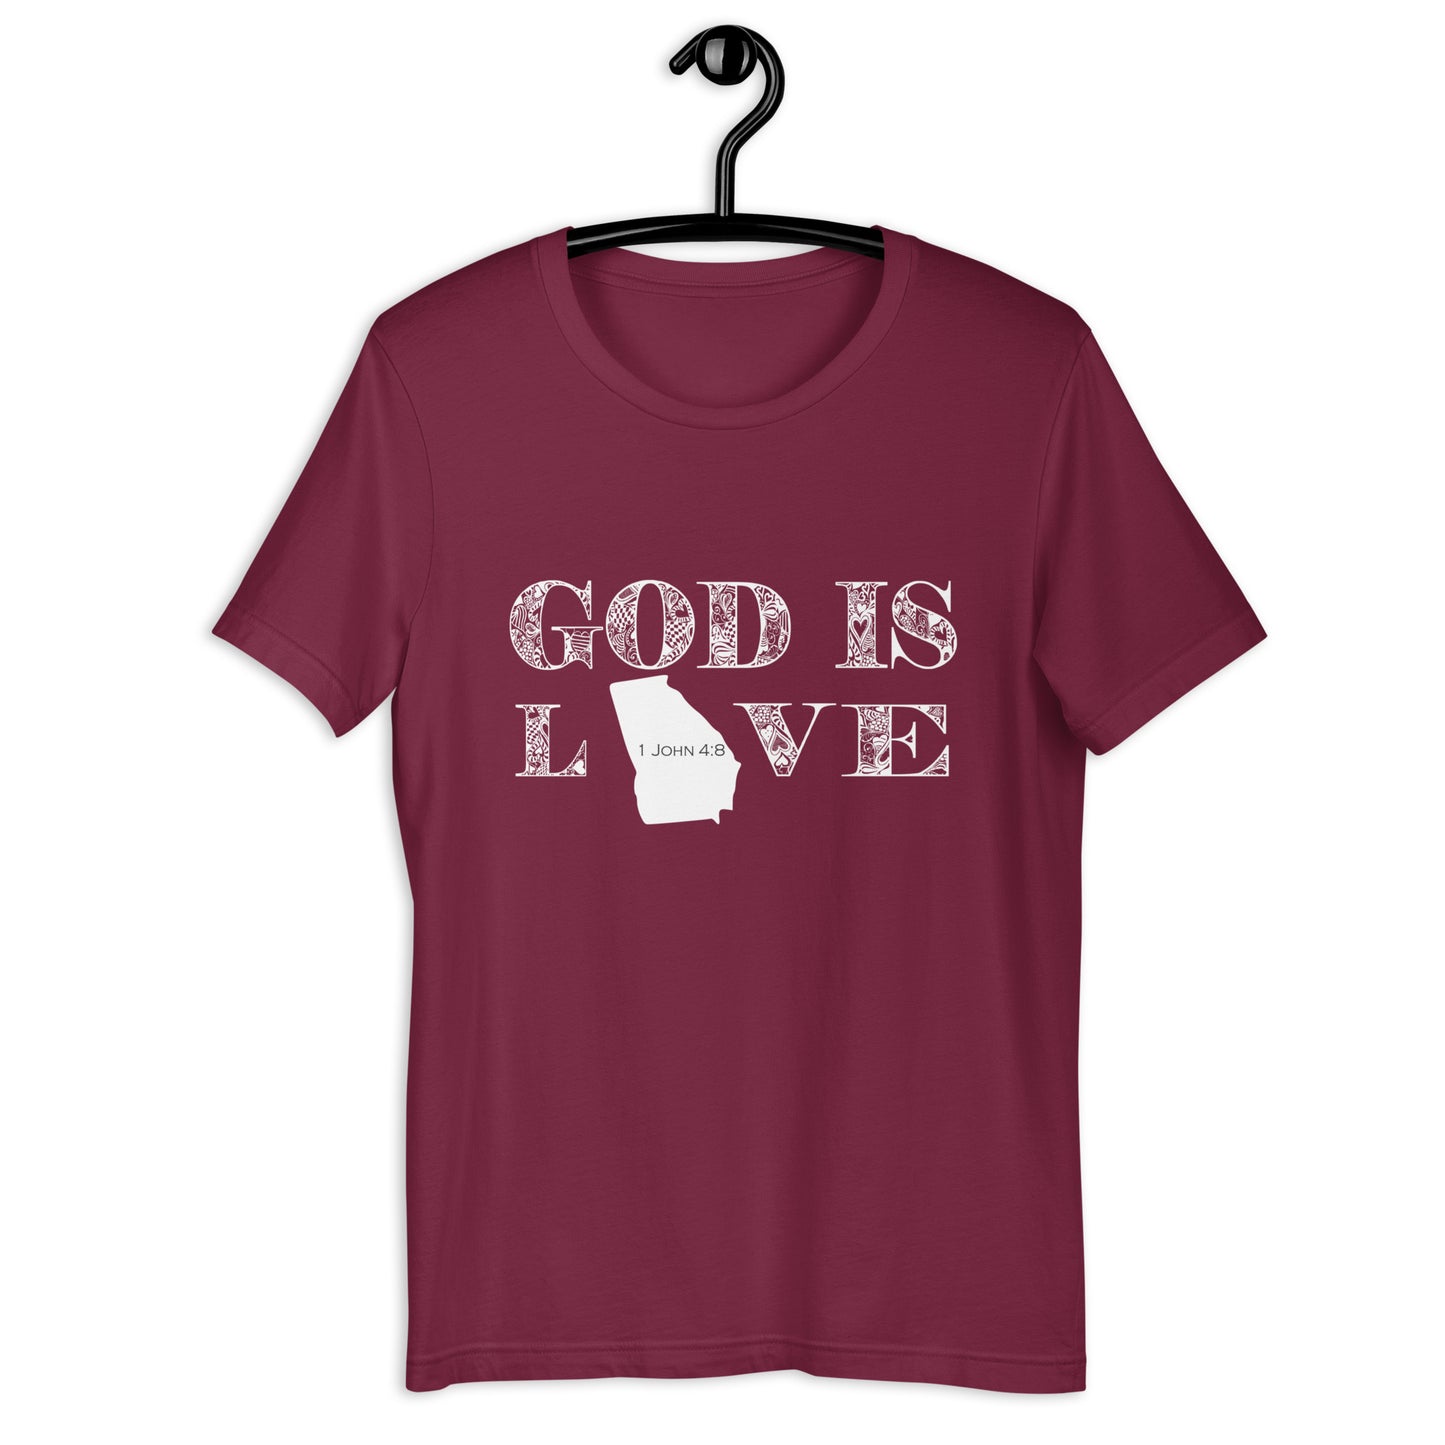 1 John 4:8 God is love Georgia T-shirt maroon